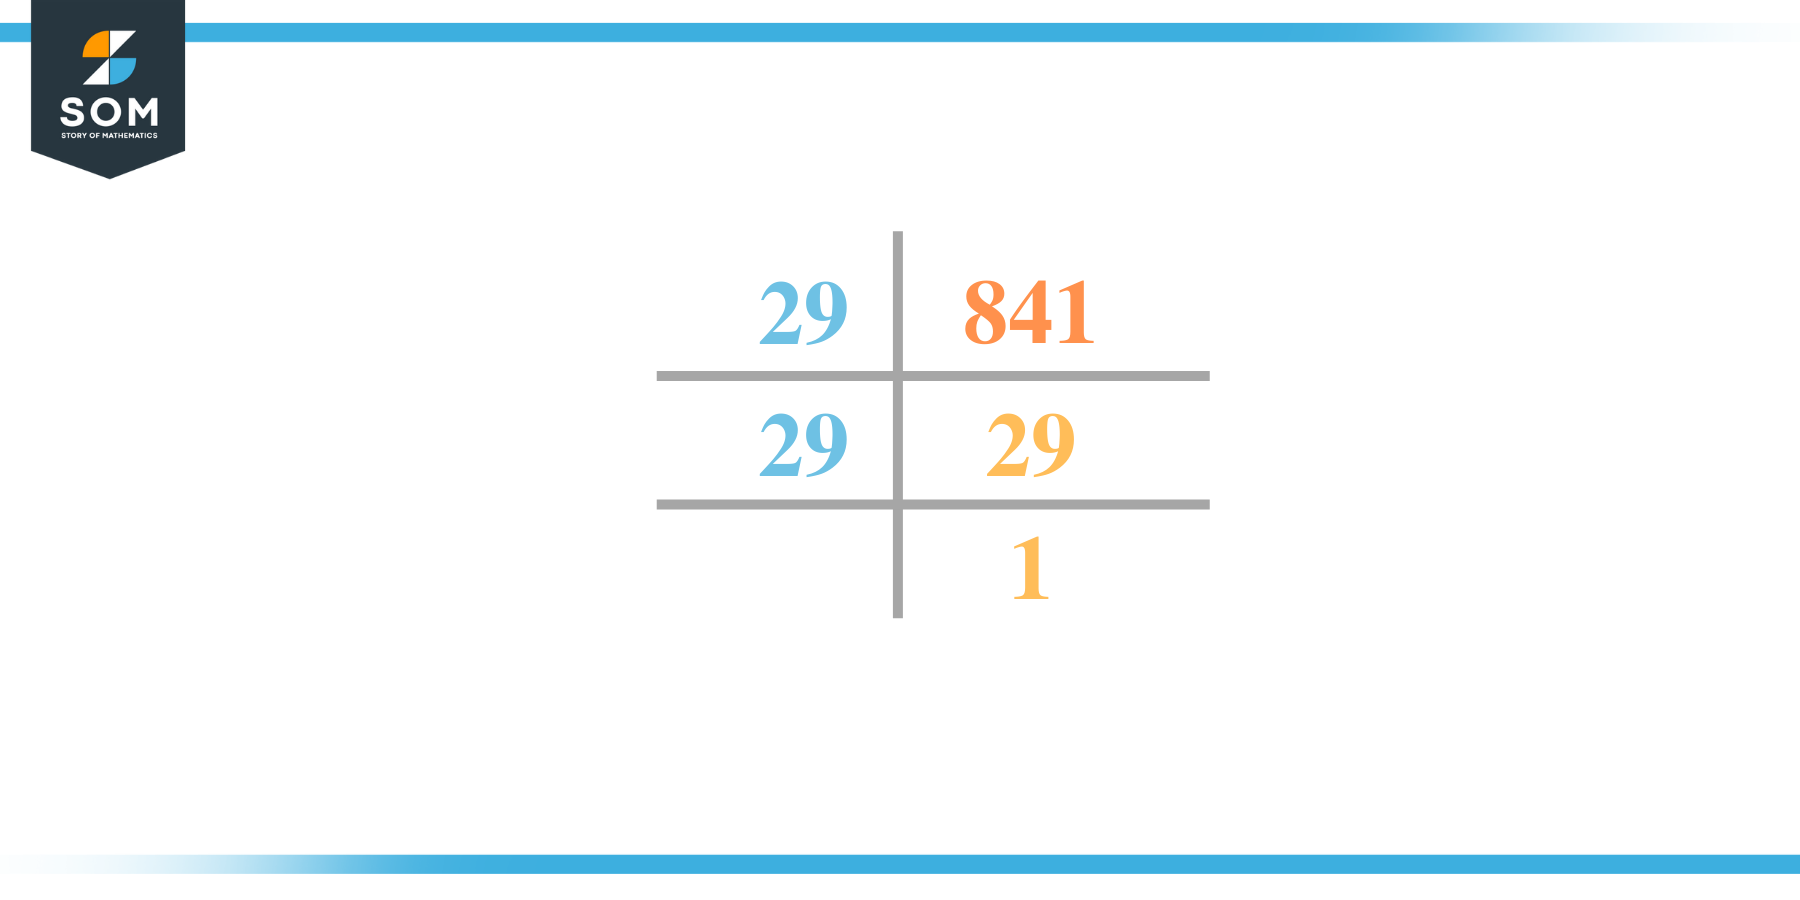 Prime factorization of 841